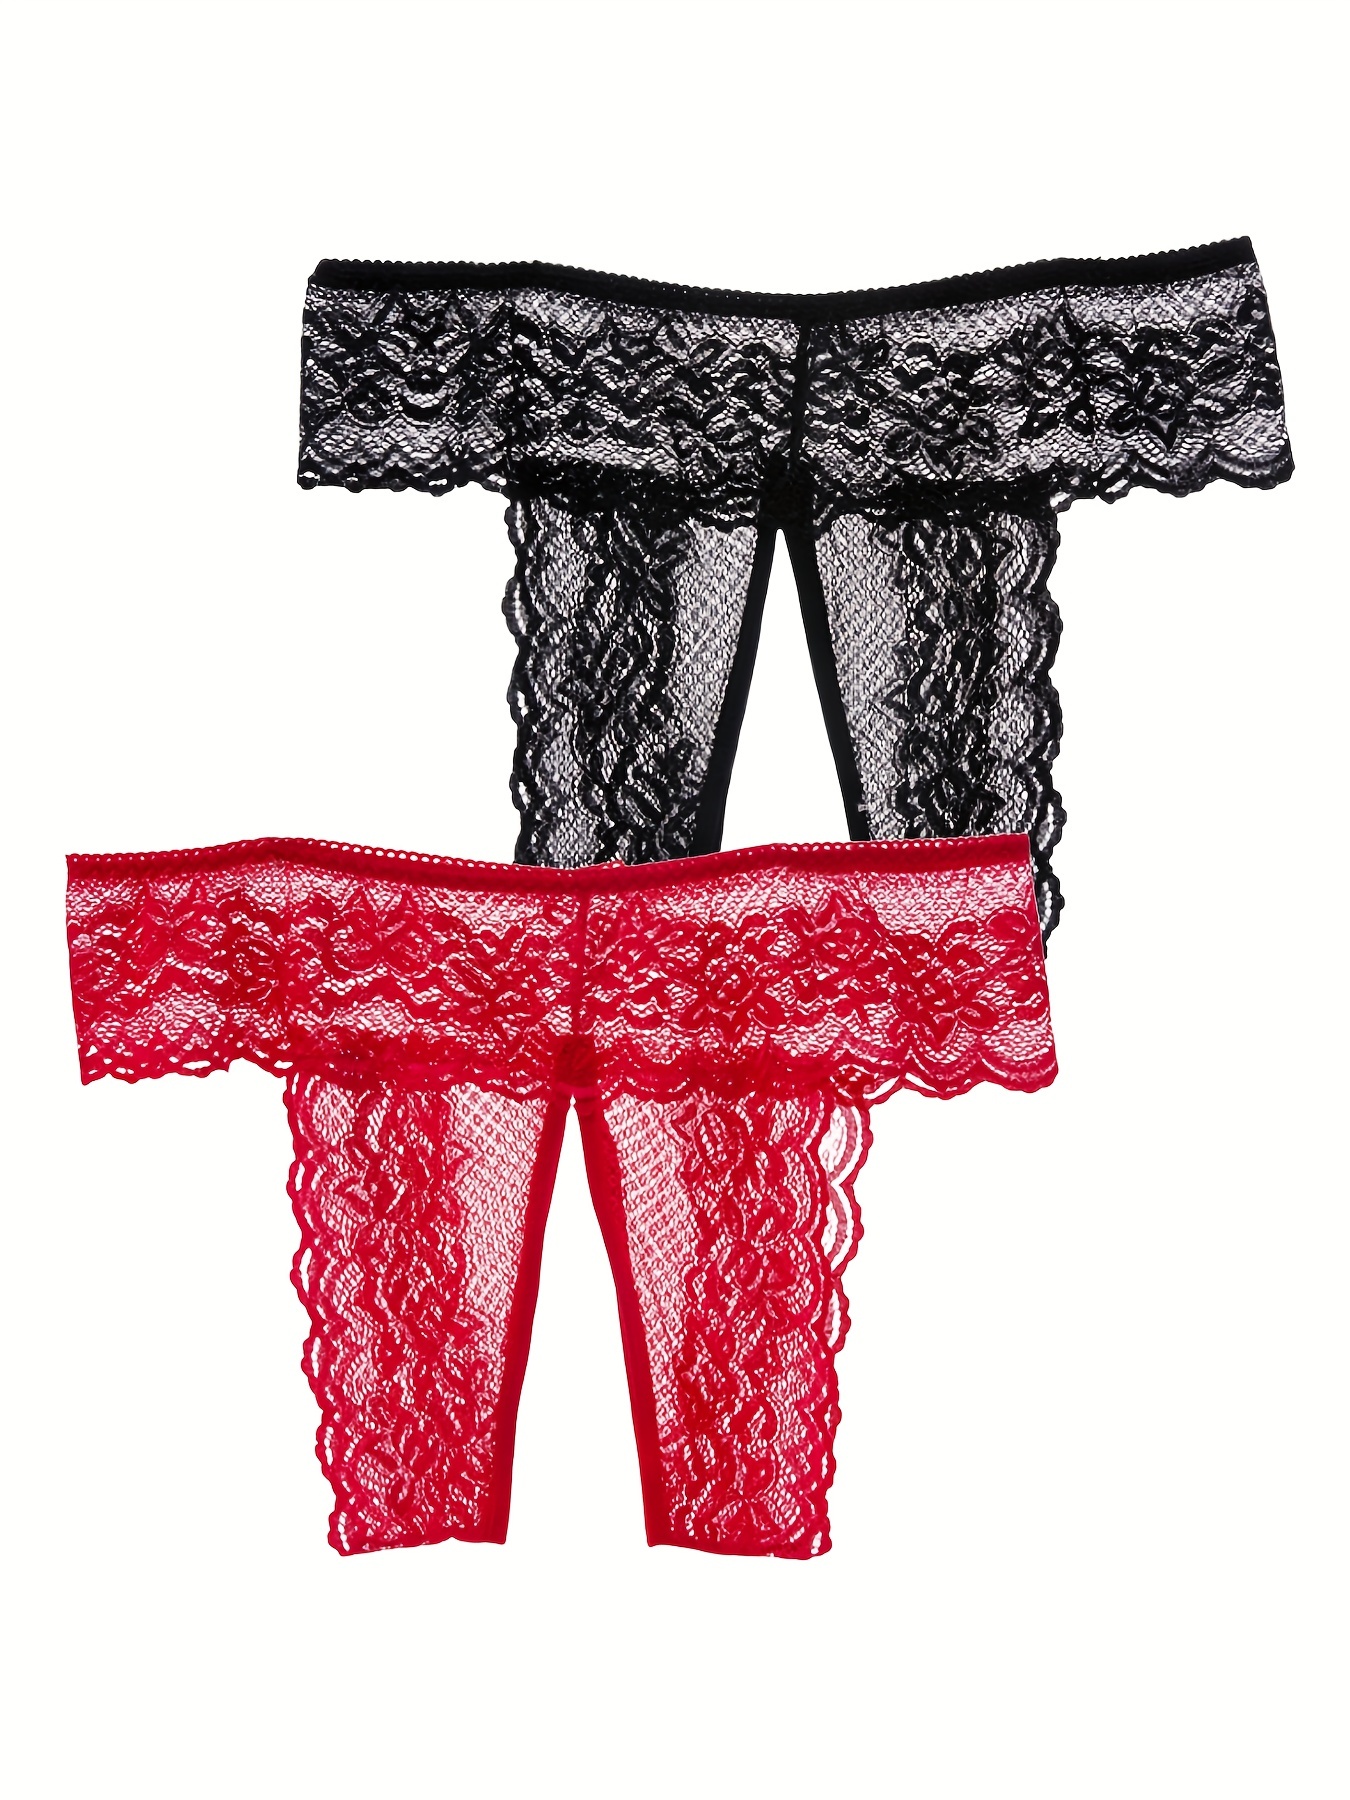 Sexy Black Crothless Panties See Through Mesh Thong G-string Lingerie OS  XXS-S